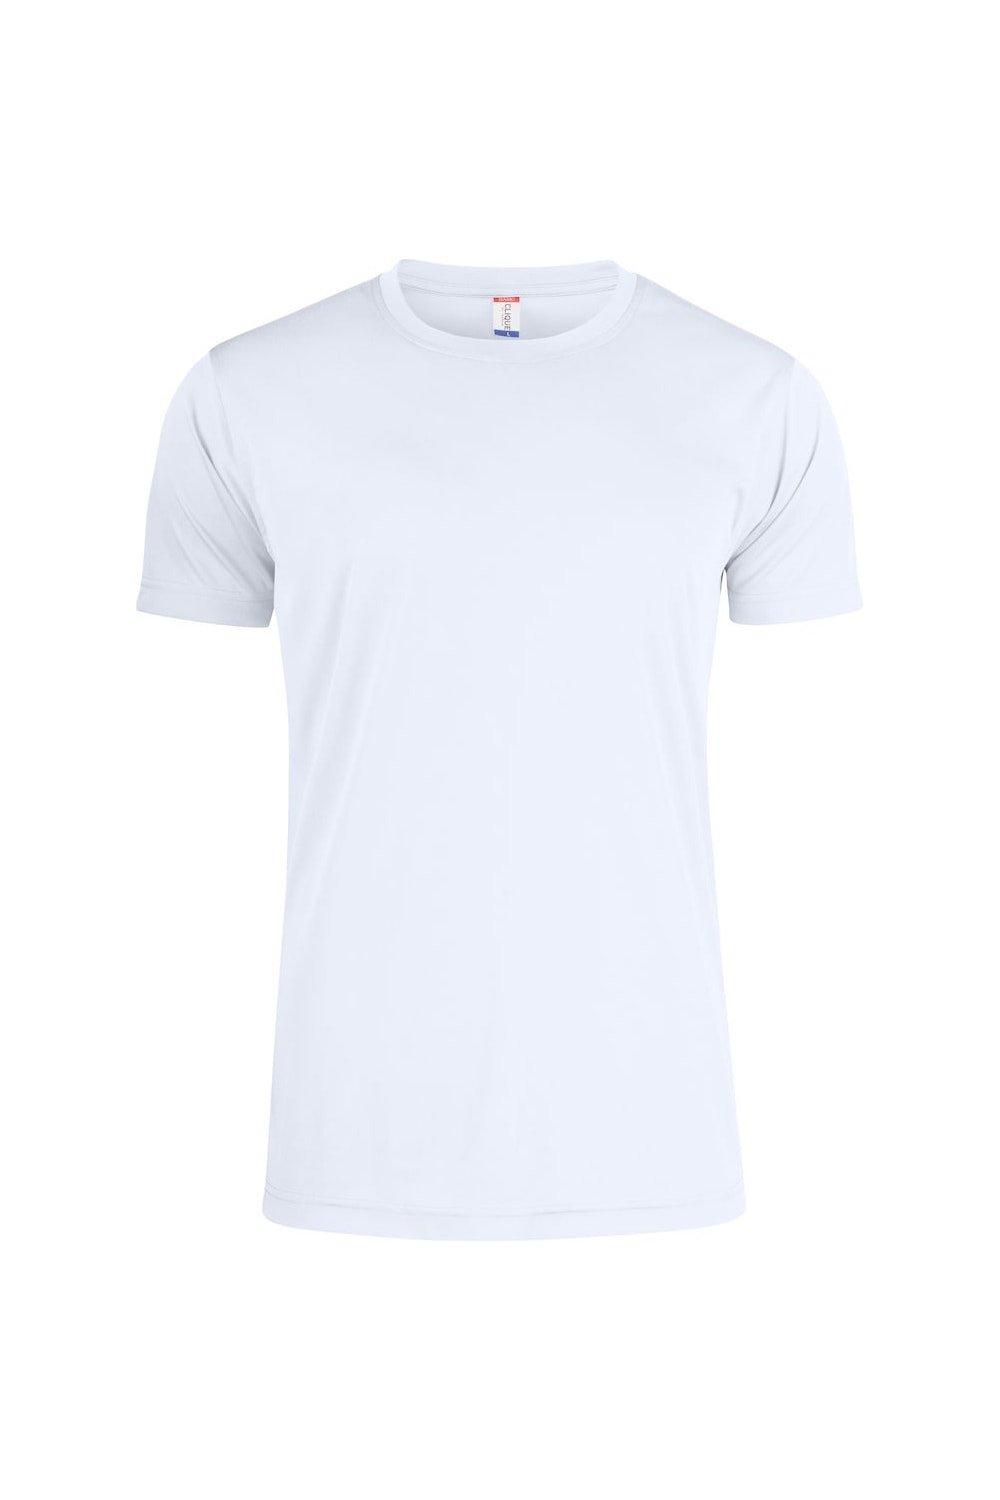 Активная футболка Clique, белый футболка clique с надписью 42 размер